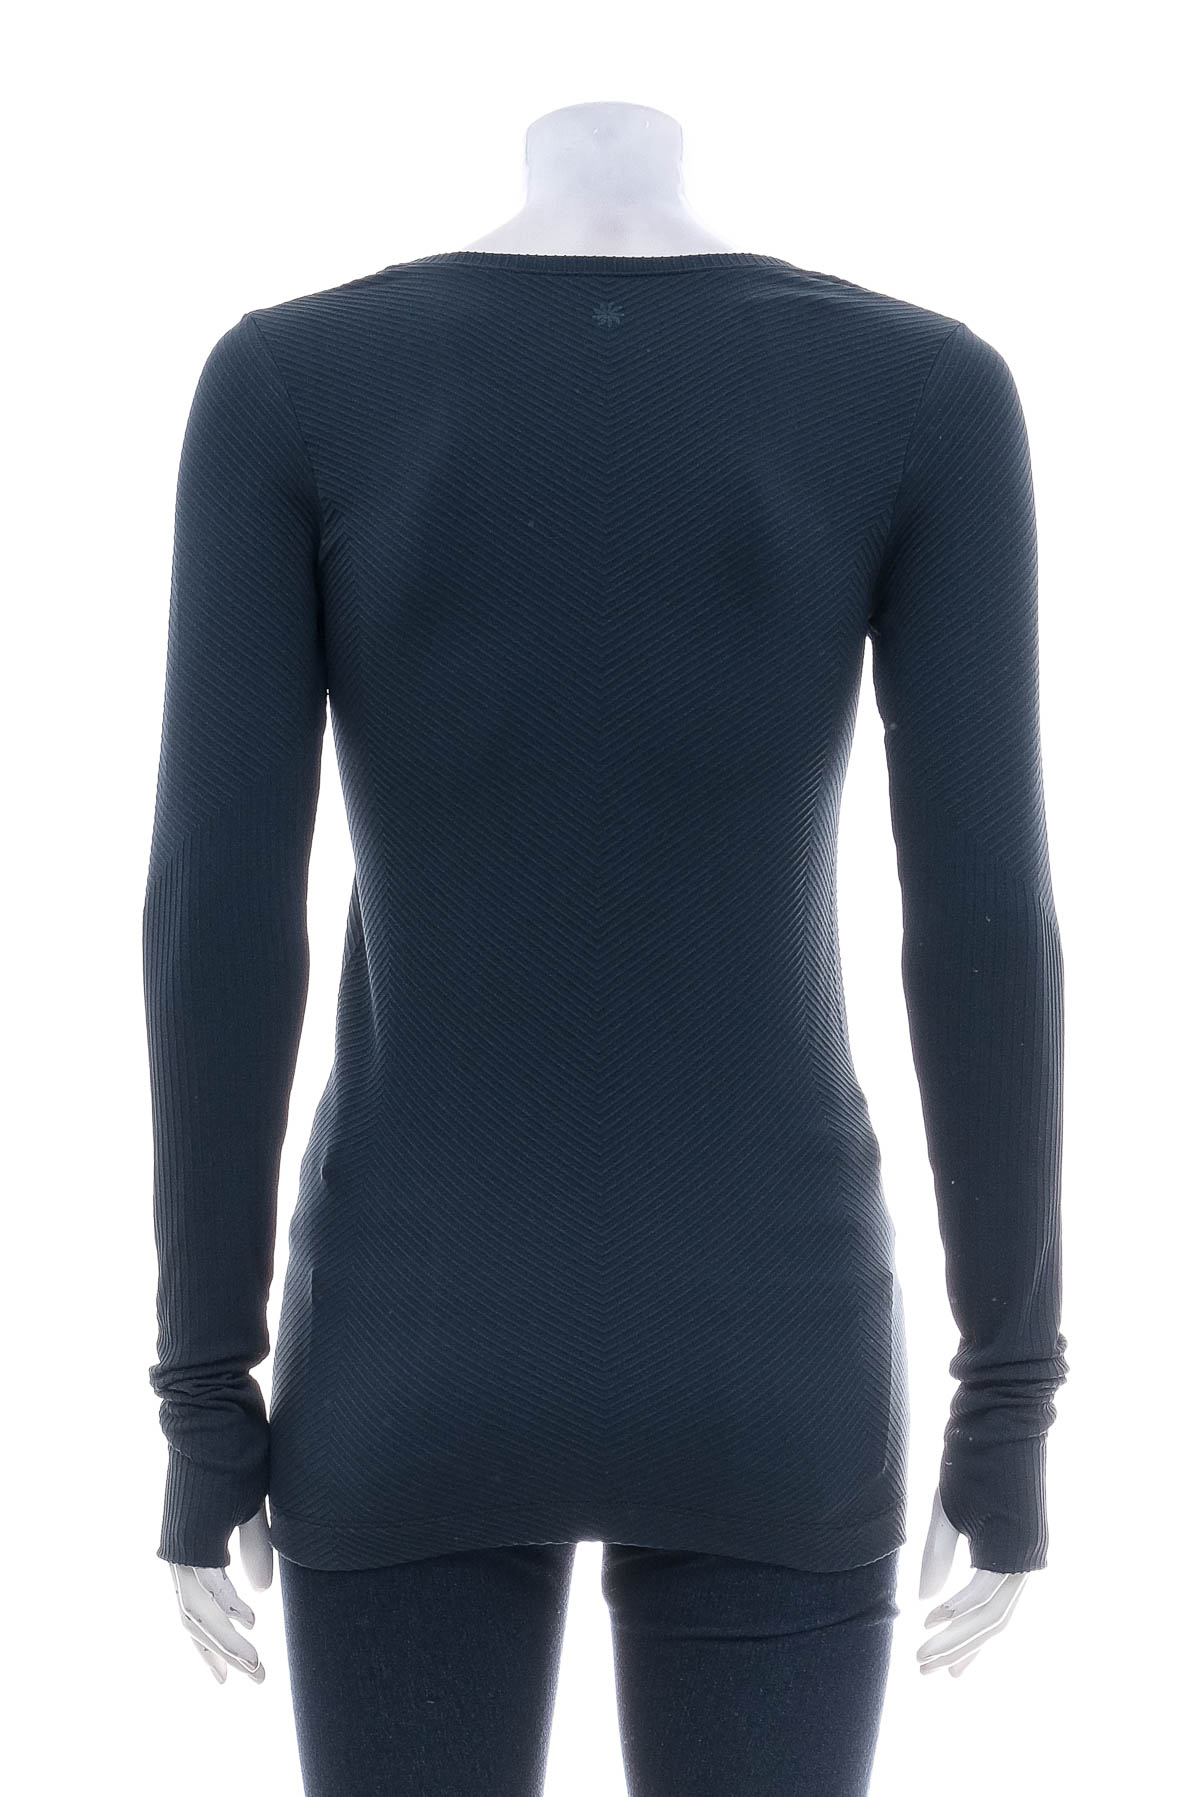 Дамска спортна блуза - Athleta - 1